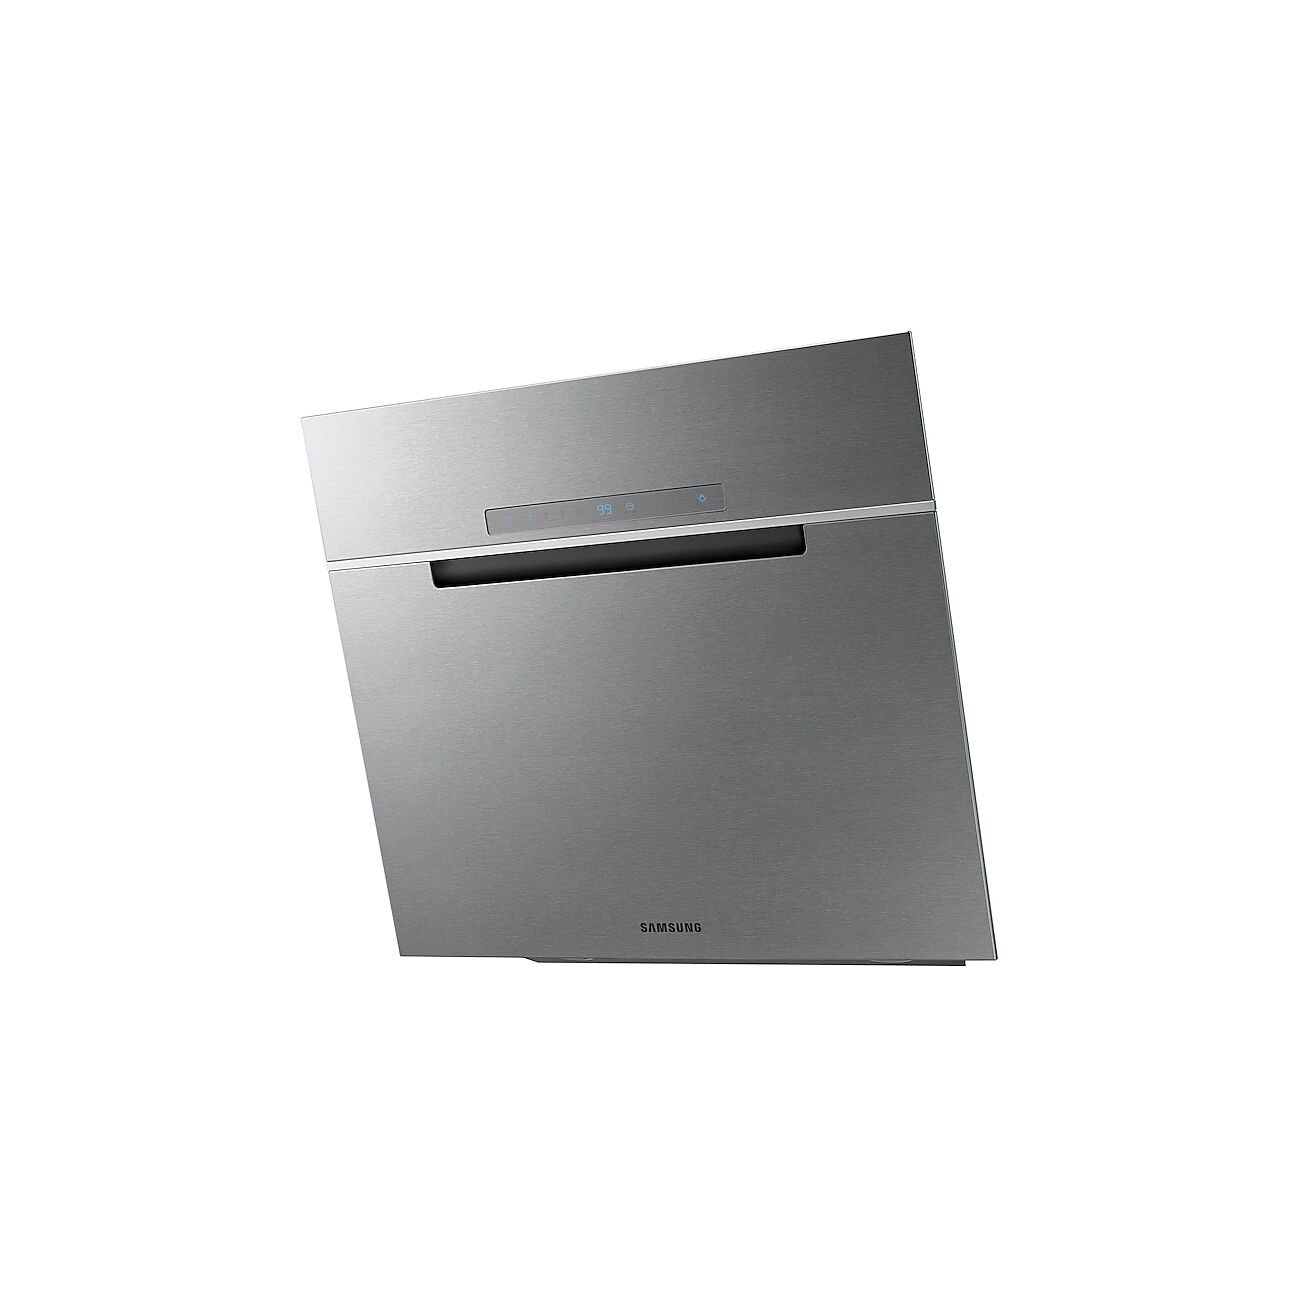 Samsung 60cm Silver Wall Mount Cooker Hood With Premium Design (NK24M7070VS/UR)